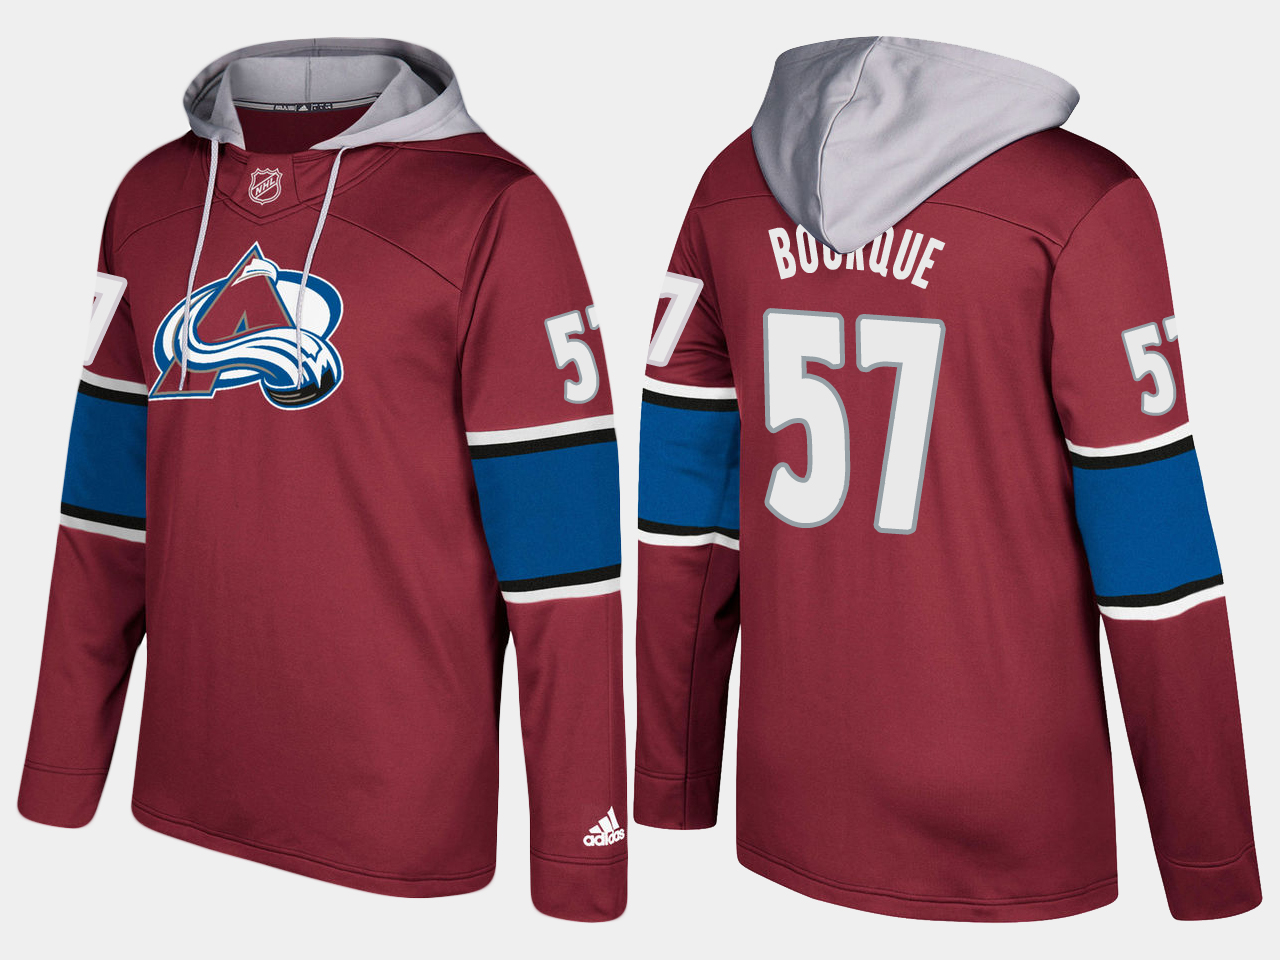 Men NHL Colorado avalanche 57 gabriel bourque burgundy hoodie